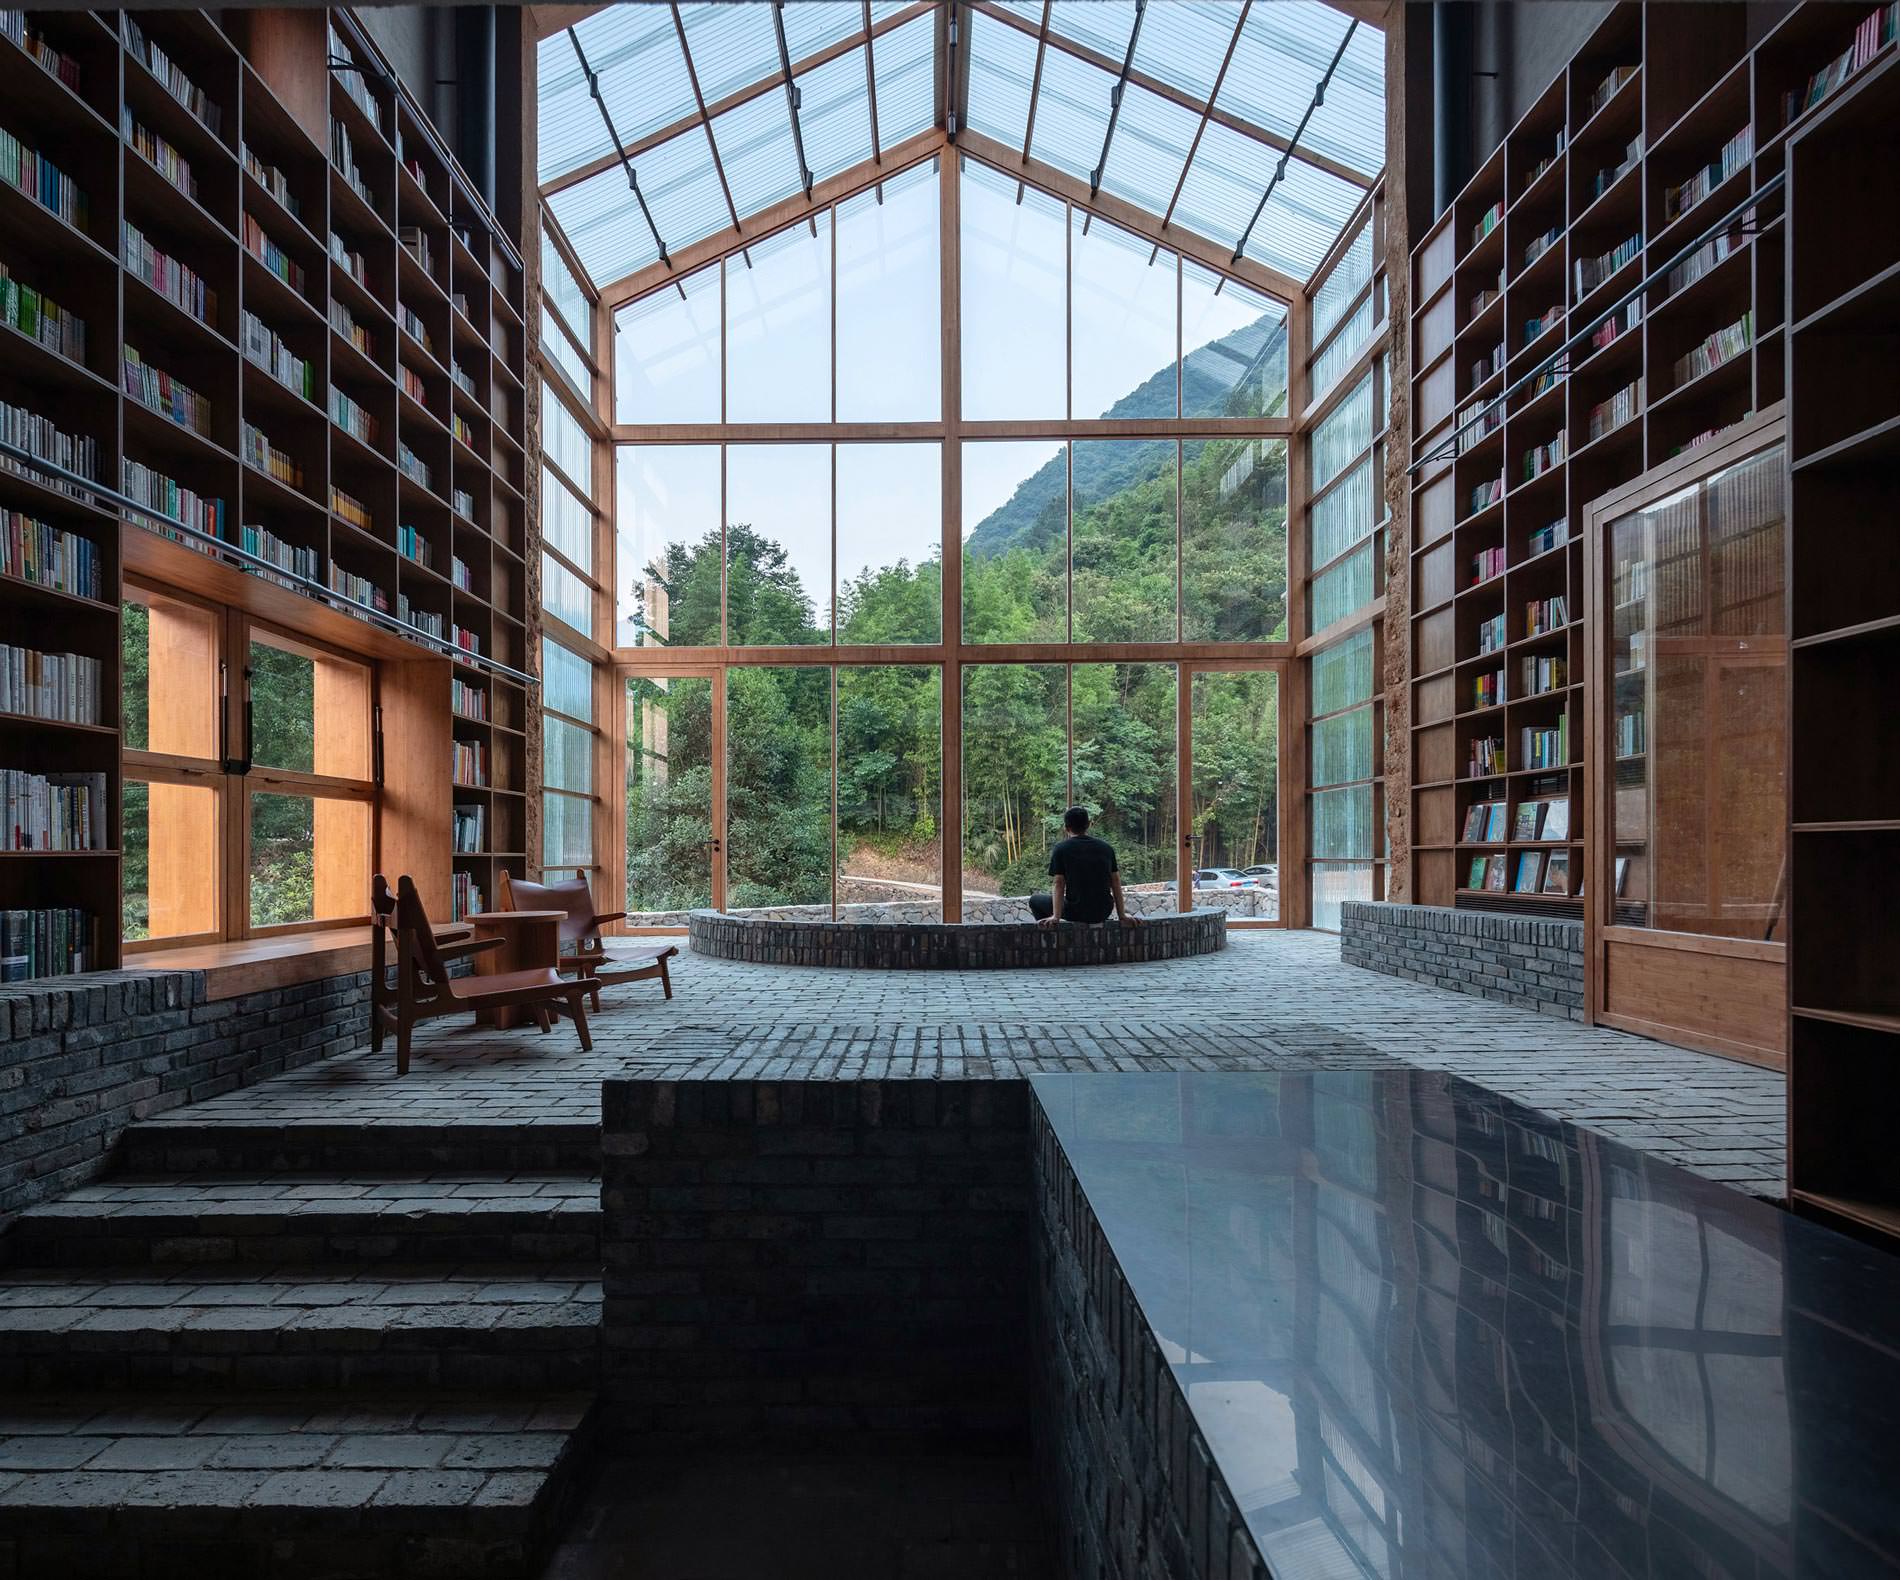 Capsule Hotel & Librairie, Village Qinglongwu, Province Zhejiang, Chine — Atelier tao+c